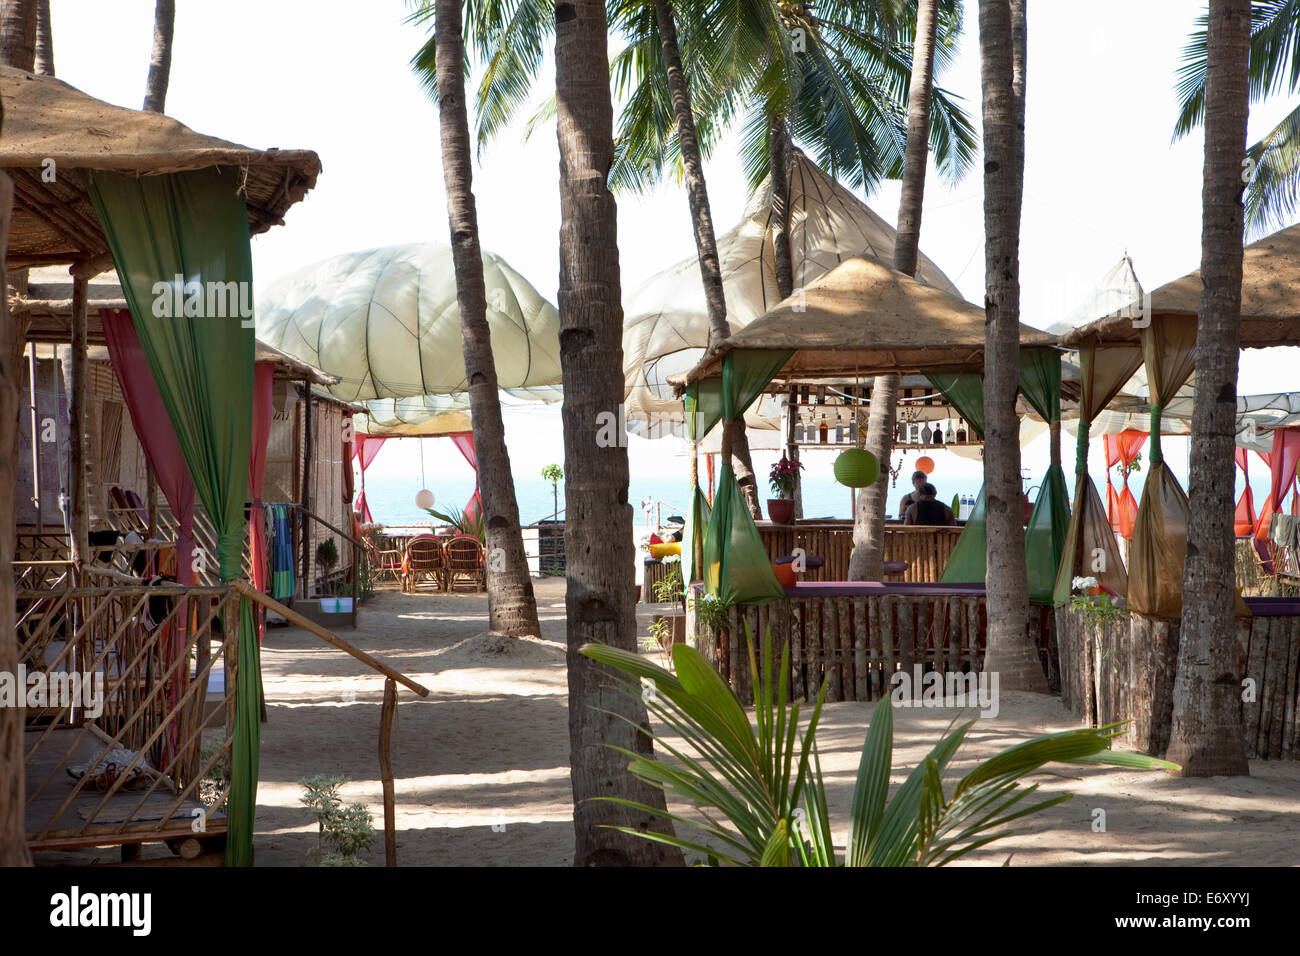 Beach resort with solar sails, bar and bungalows on the beach, Agonda, Goa, India Stock Photo